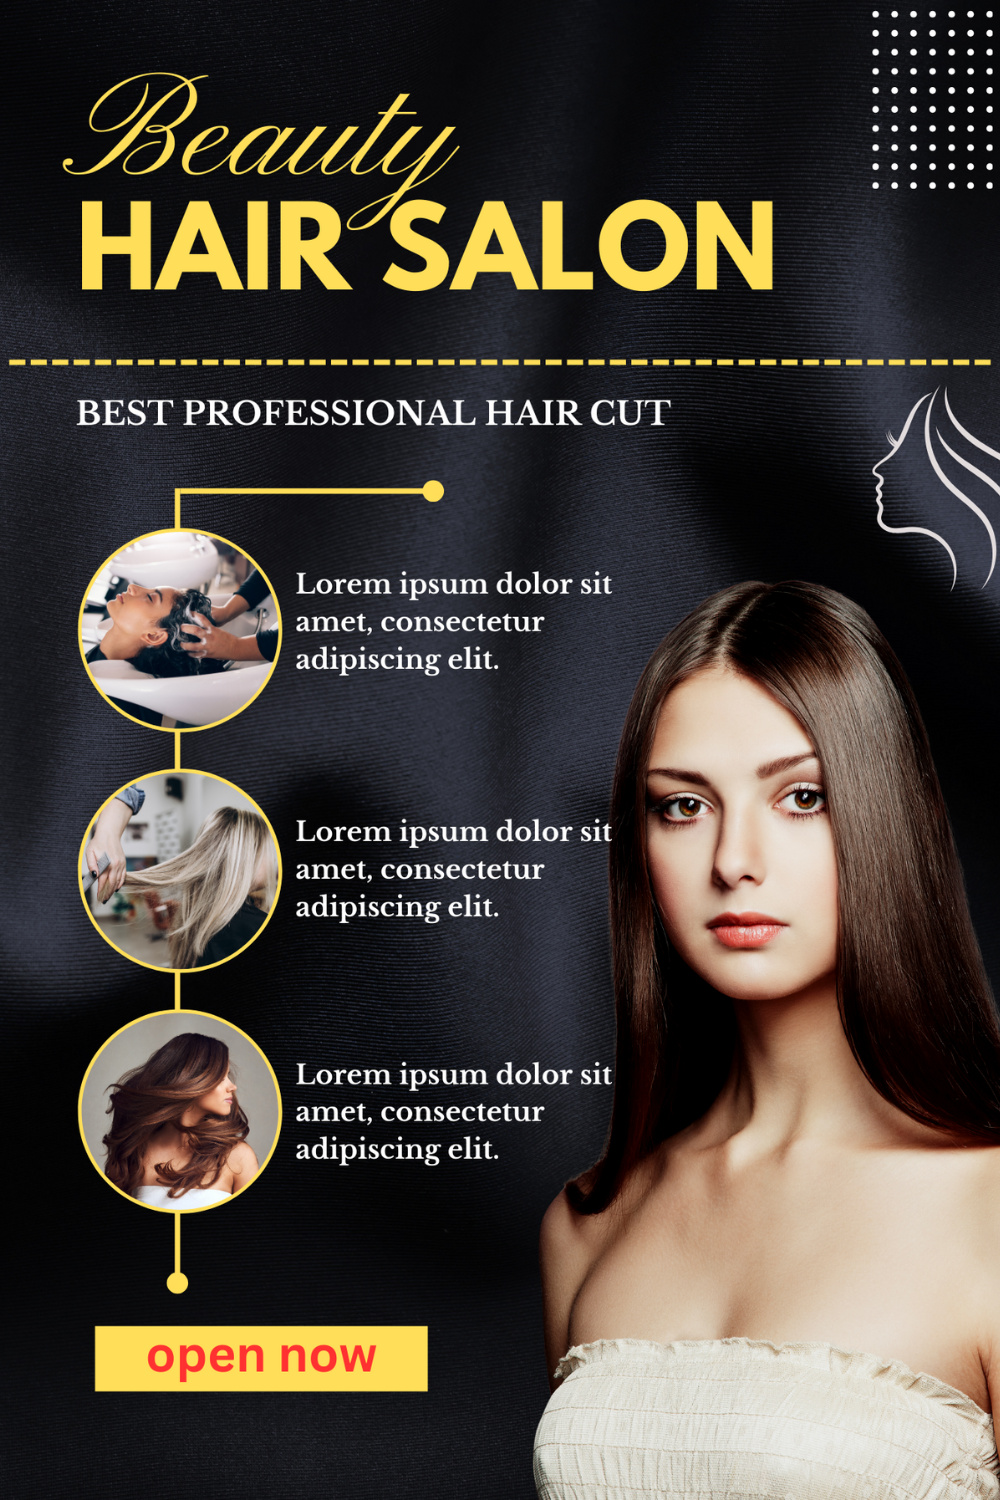 Beauty Salon flyer theme pinterest preview image.